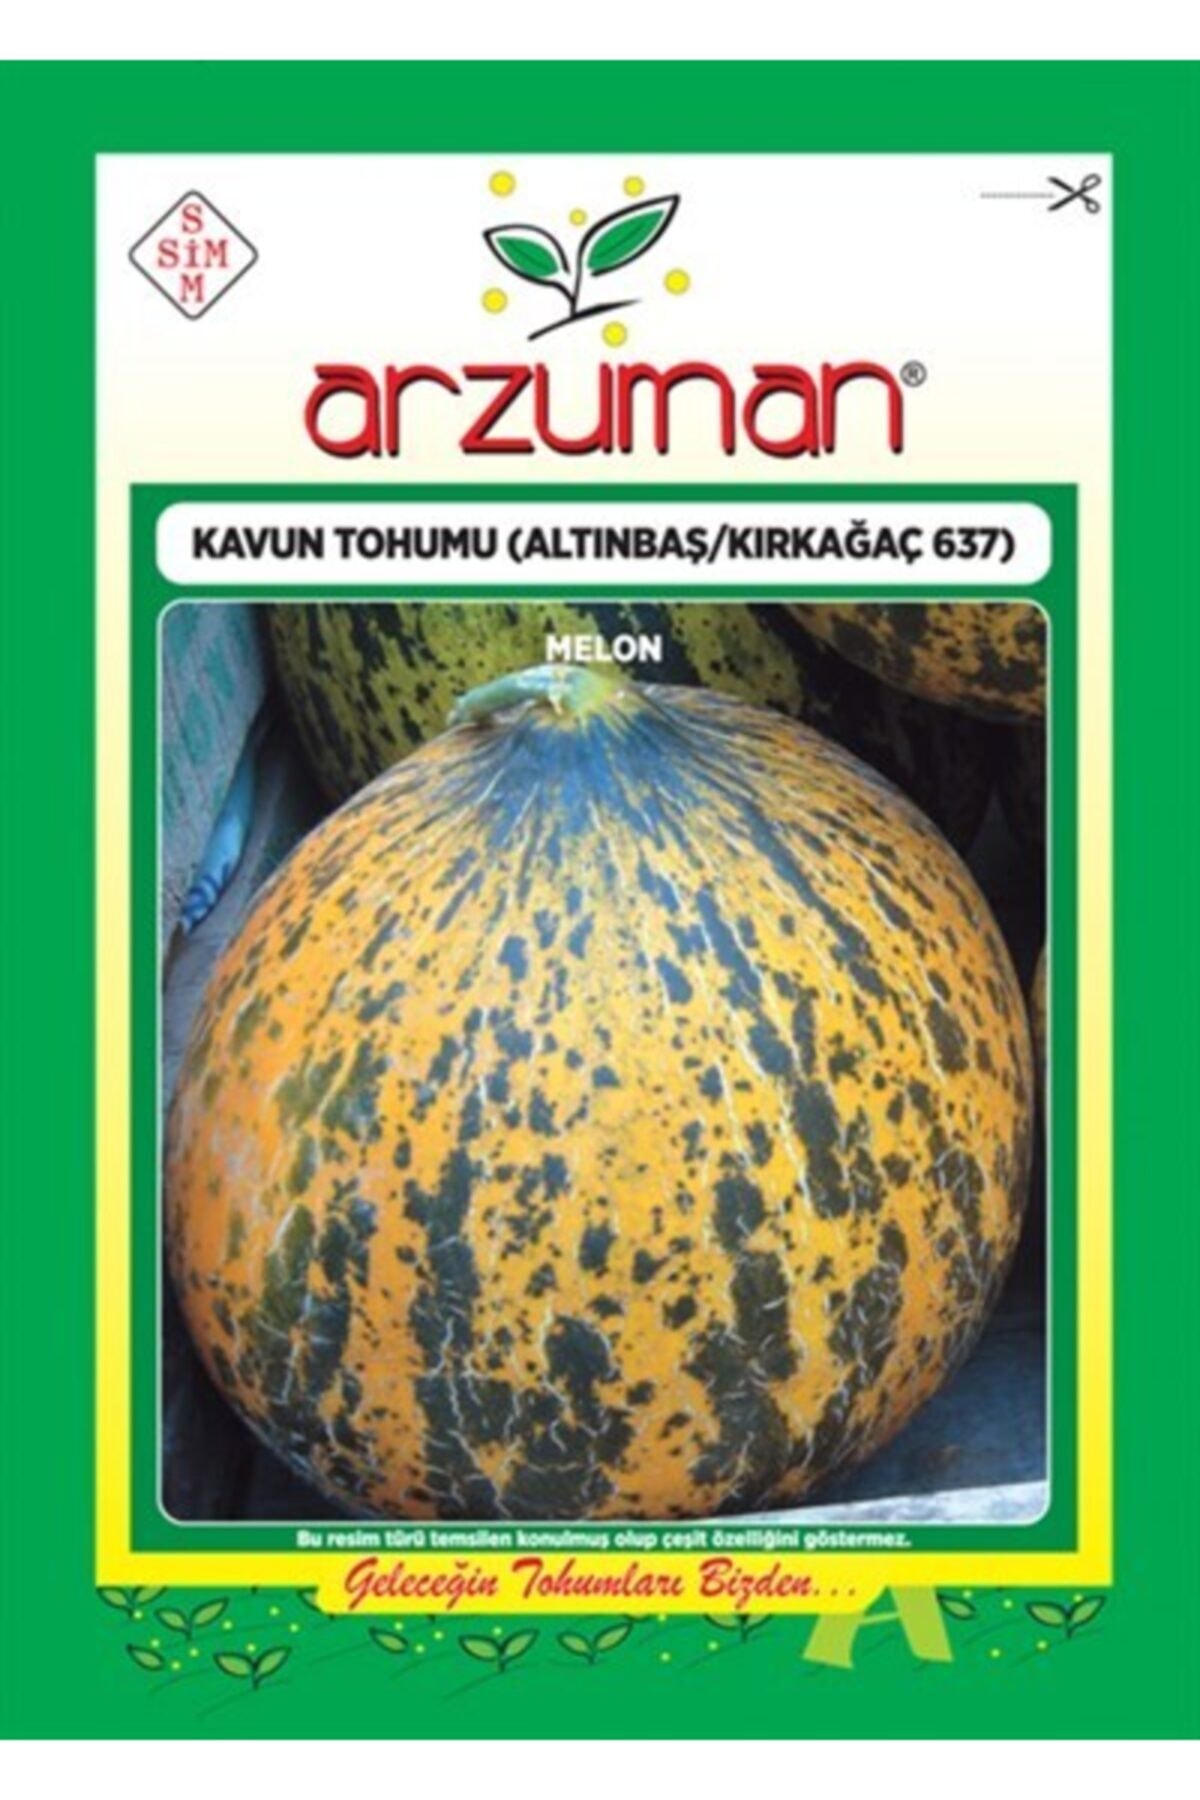 Arzuman Tohum Arzuman Kırkağaç Kavun Tohumu (ATINBAŞ) 25 gram